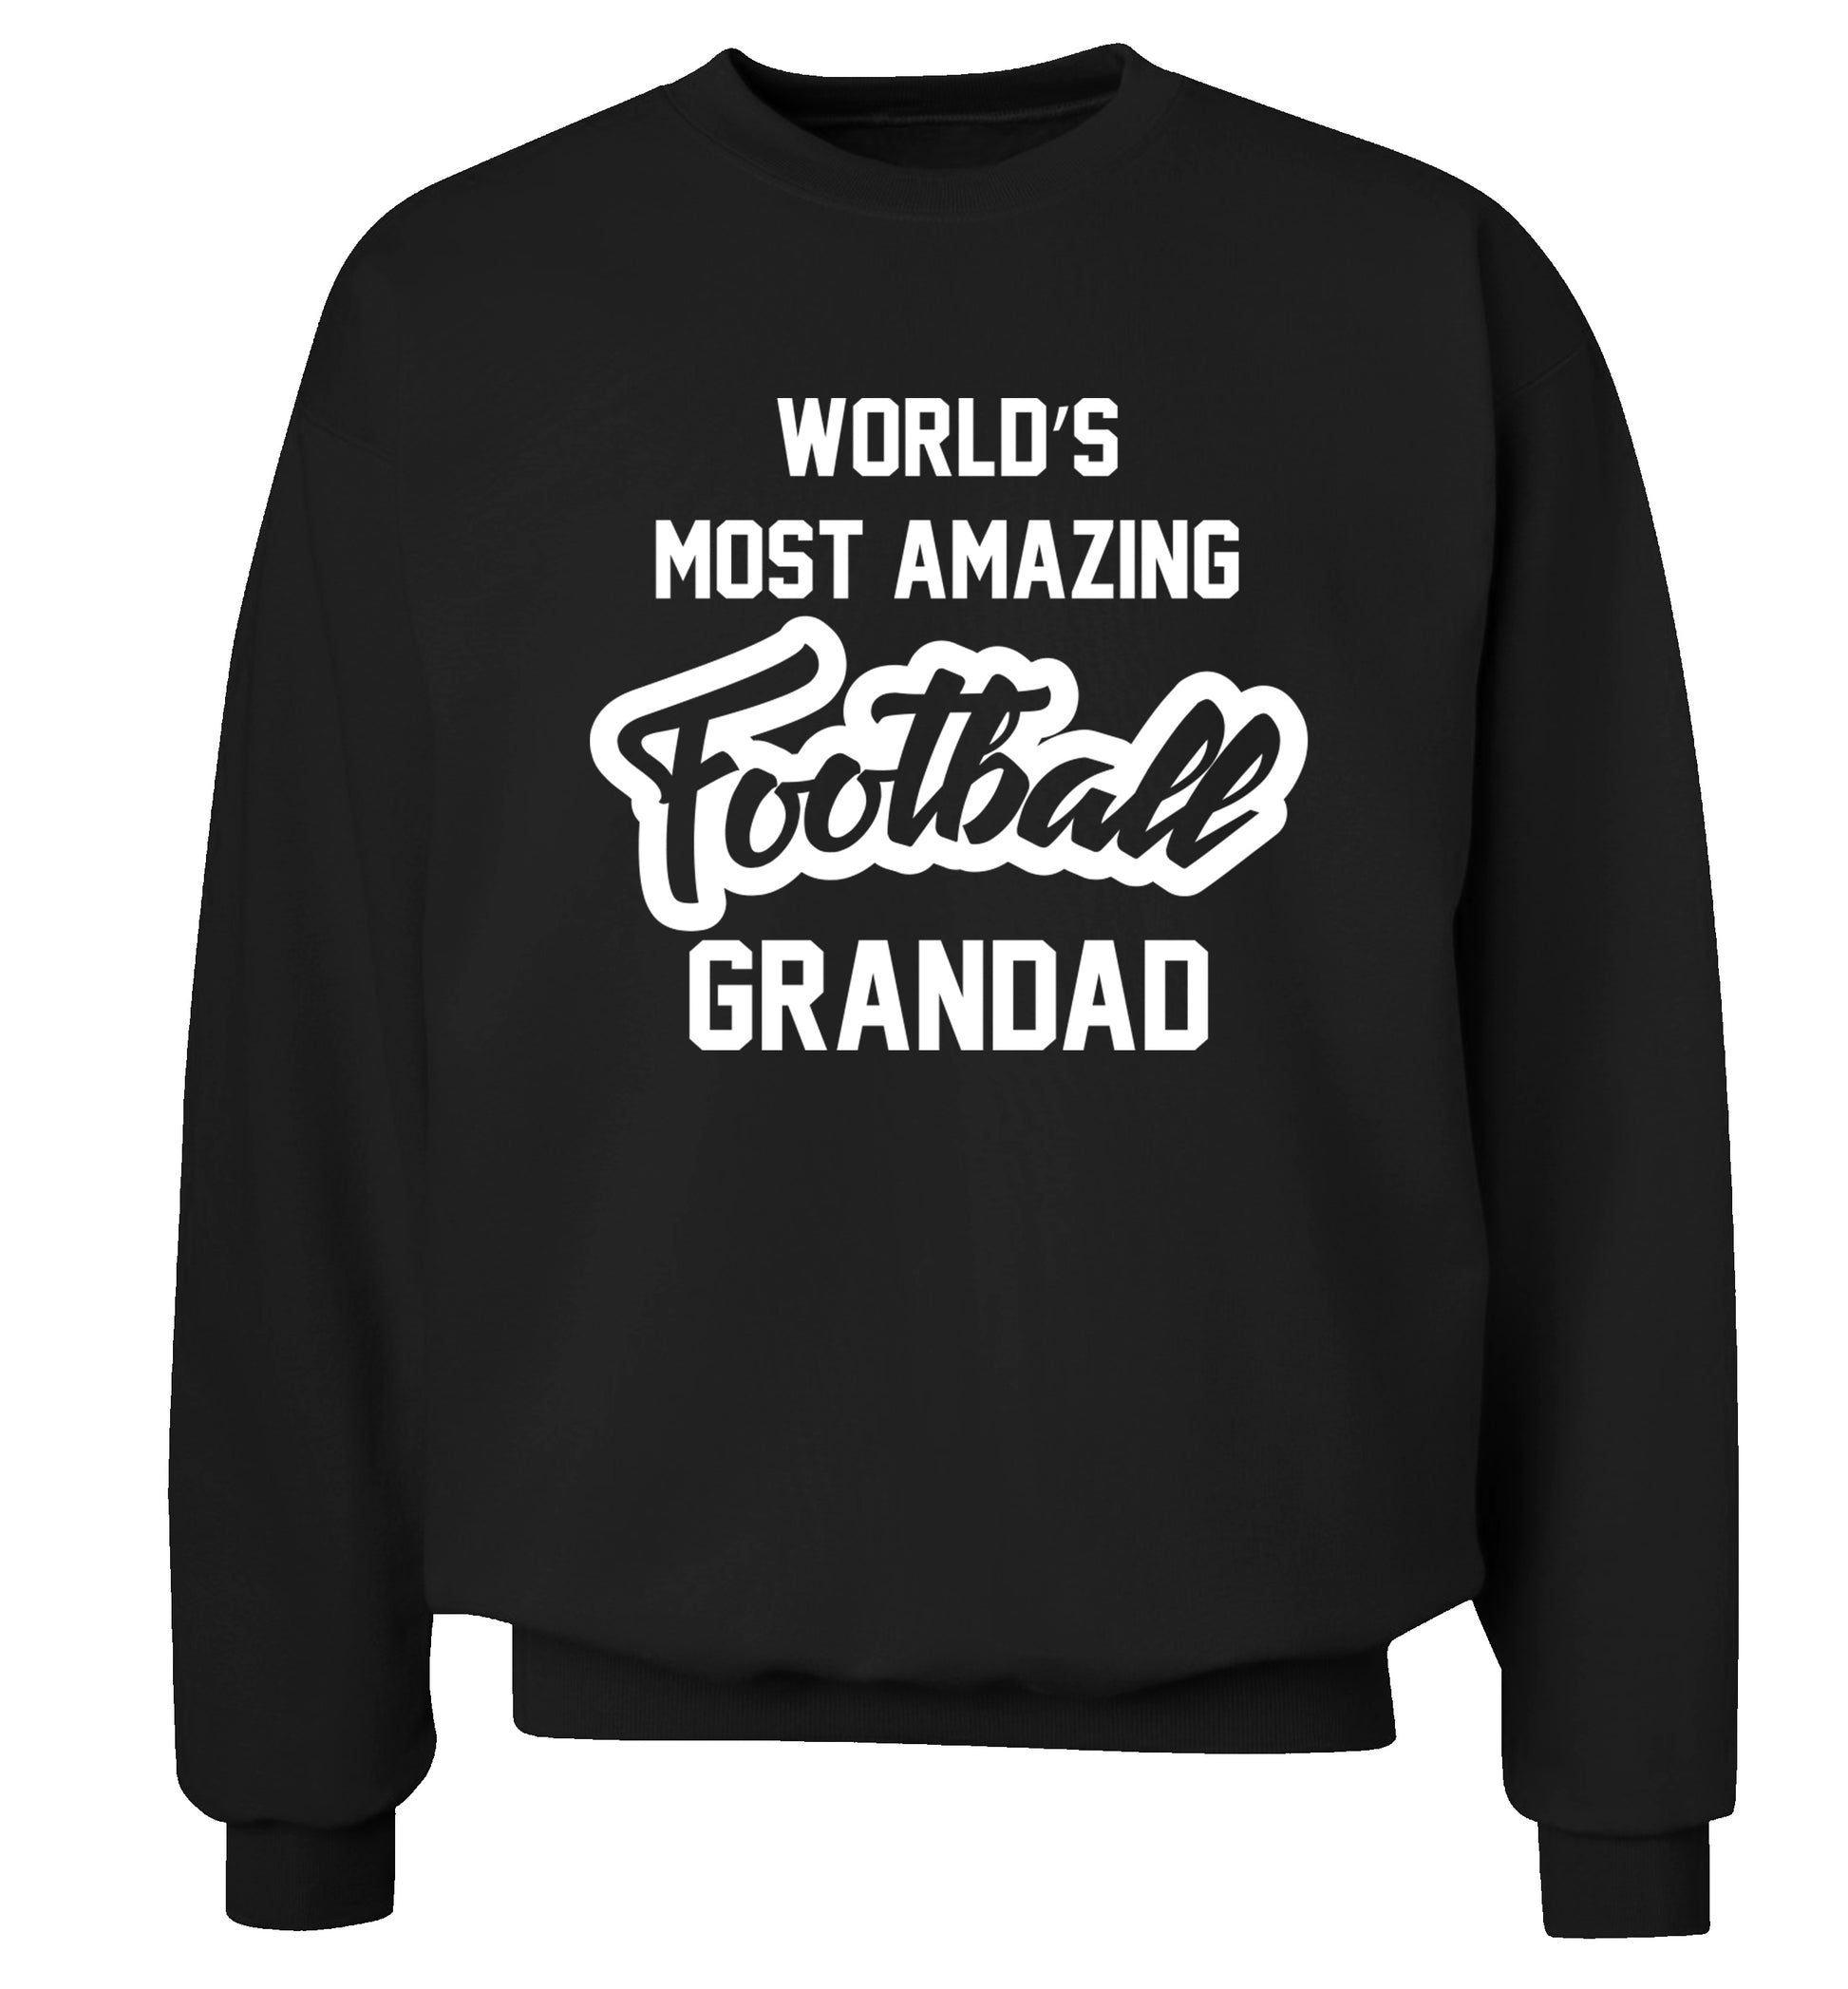 Worlds most amazing football grandad Adult's unisexblack Sweater 2XL